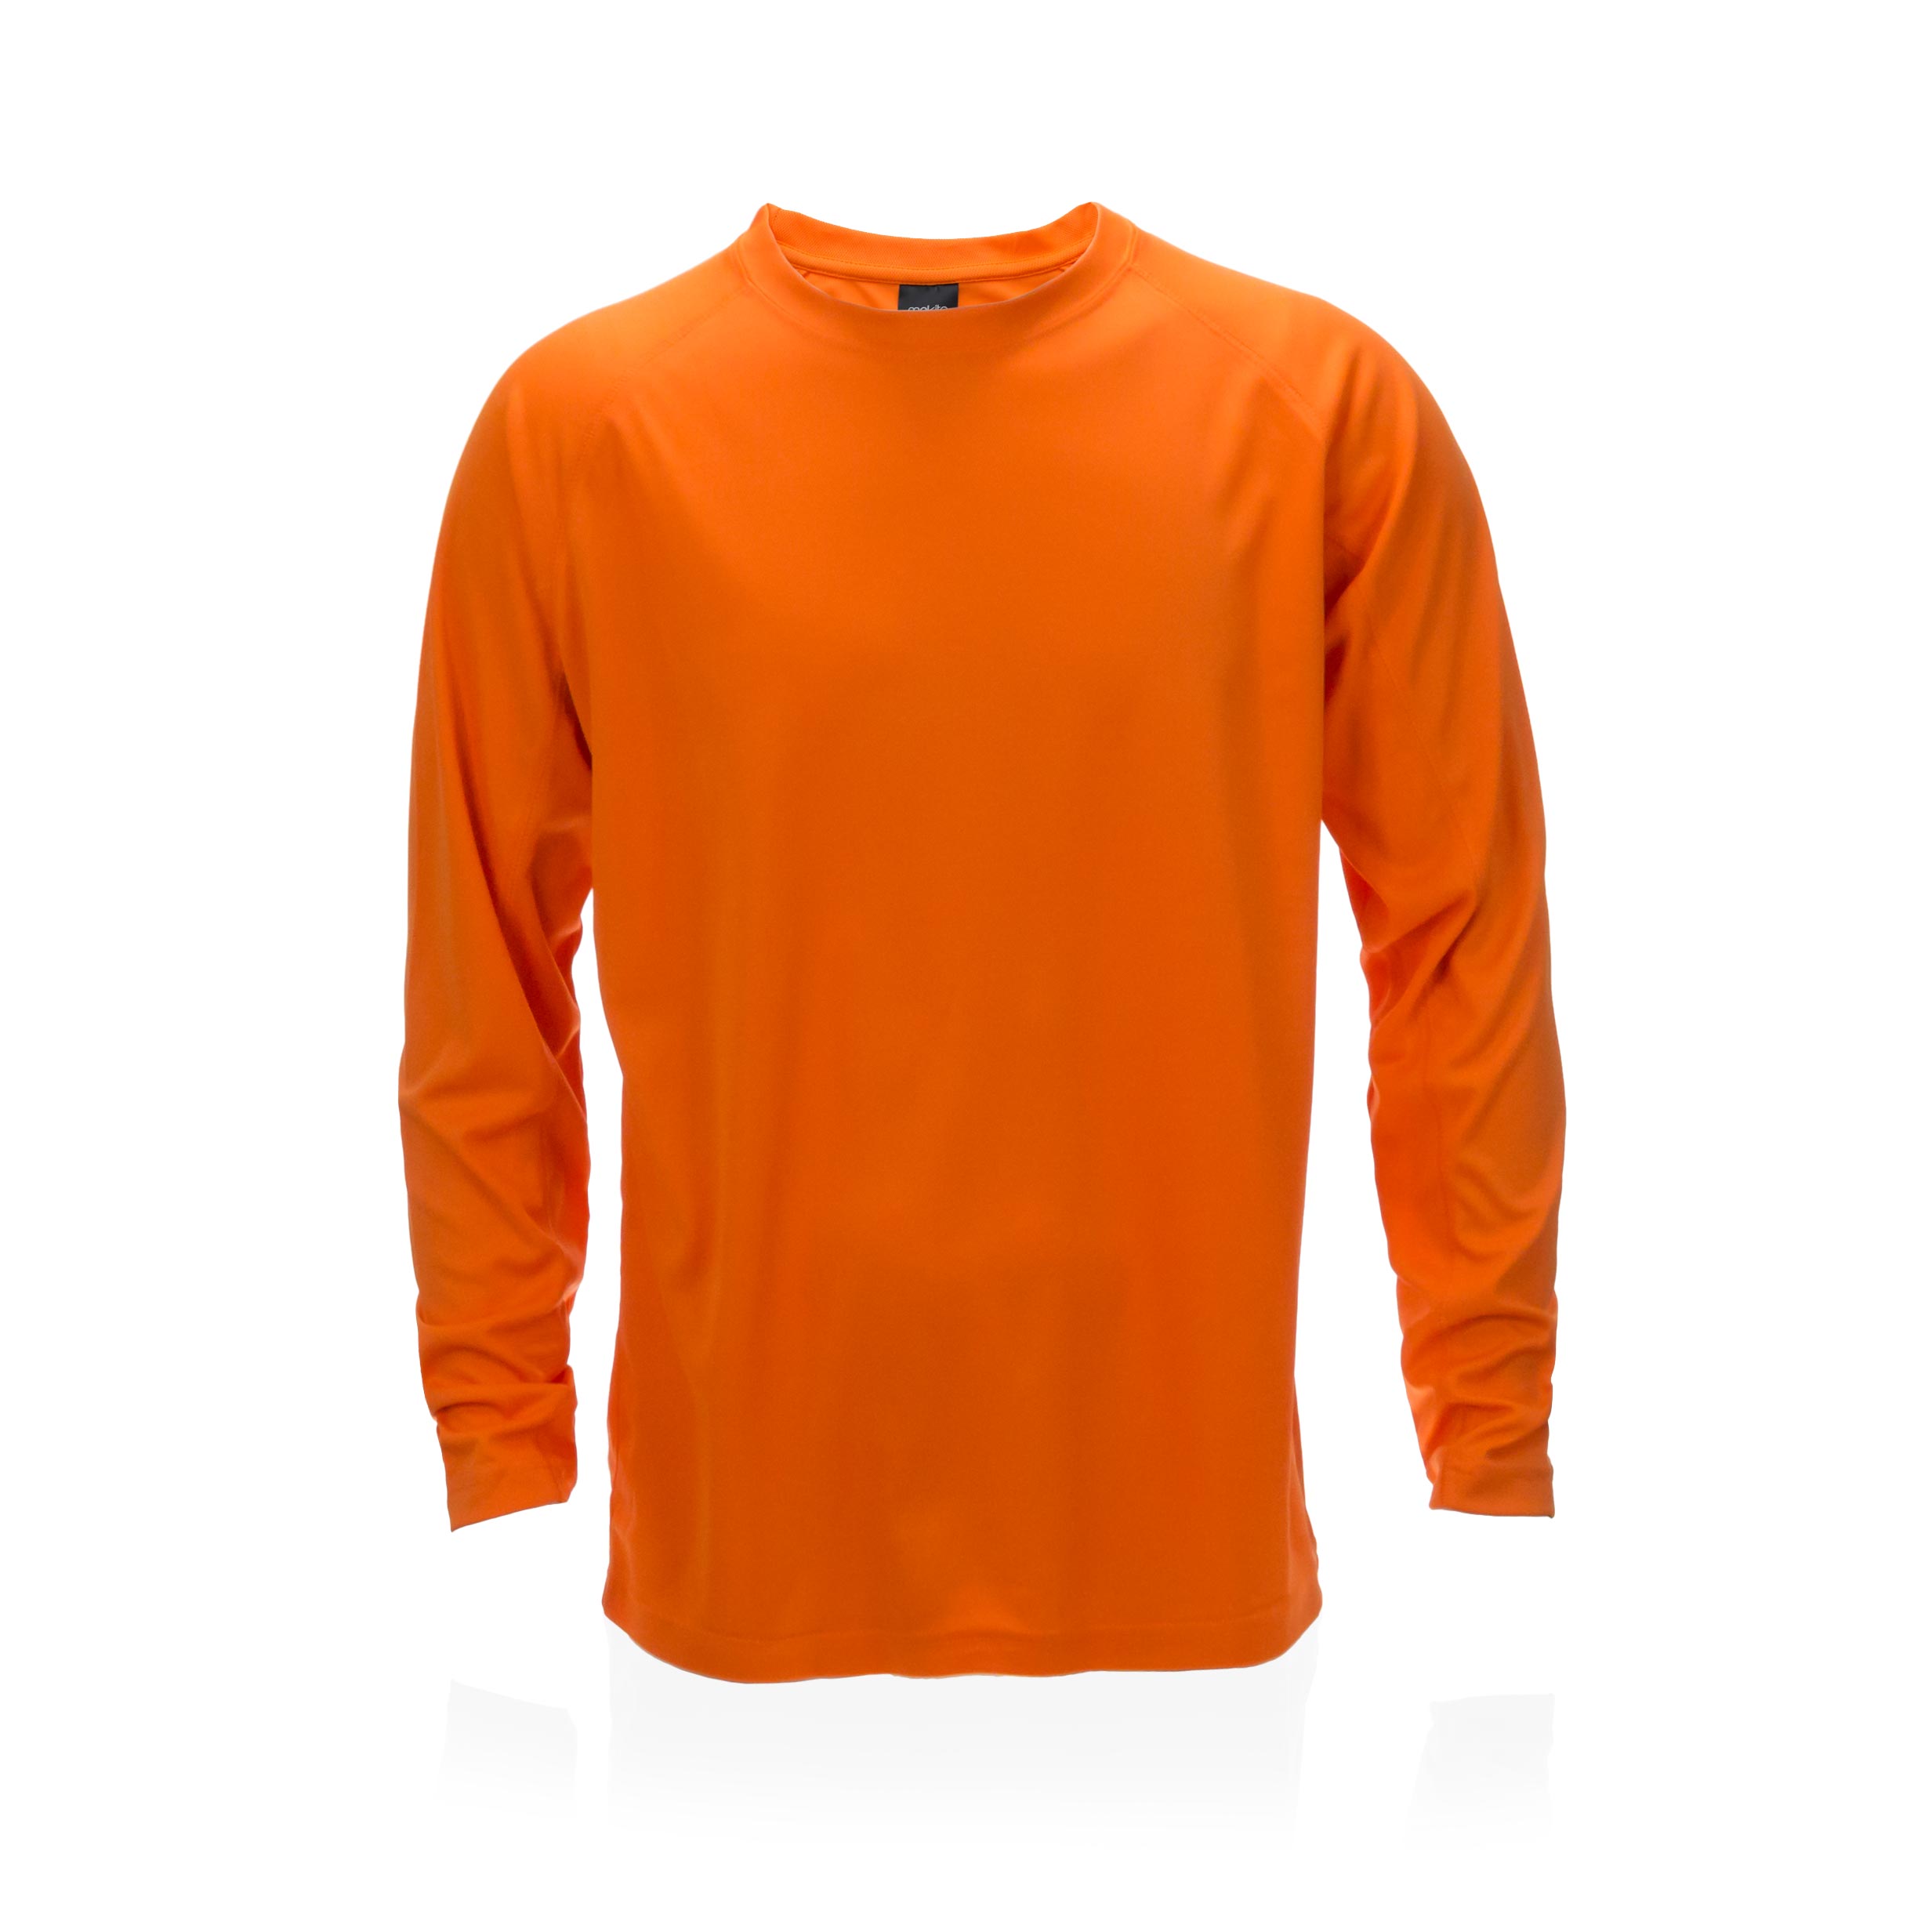 Camiseta Adulto McComb naranja talla L